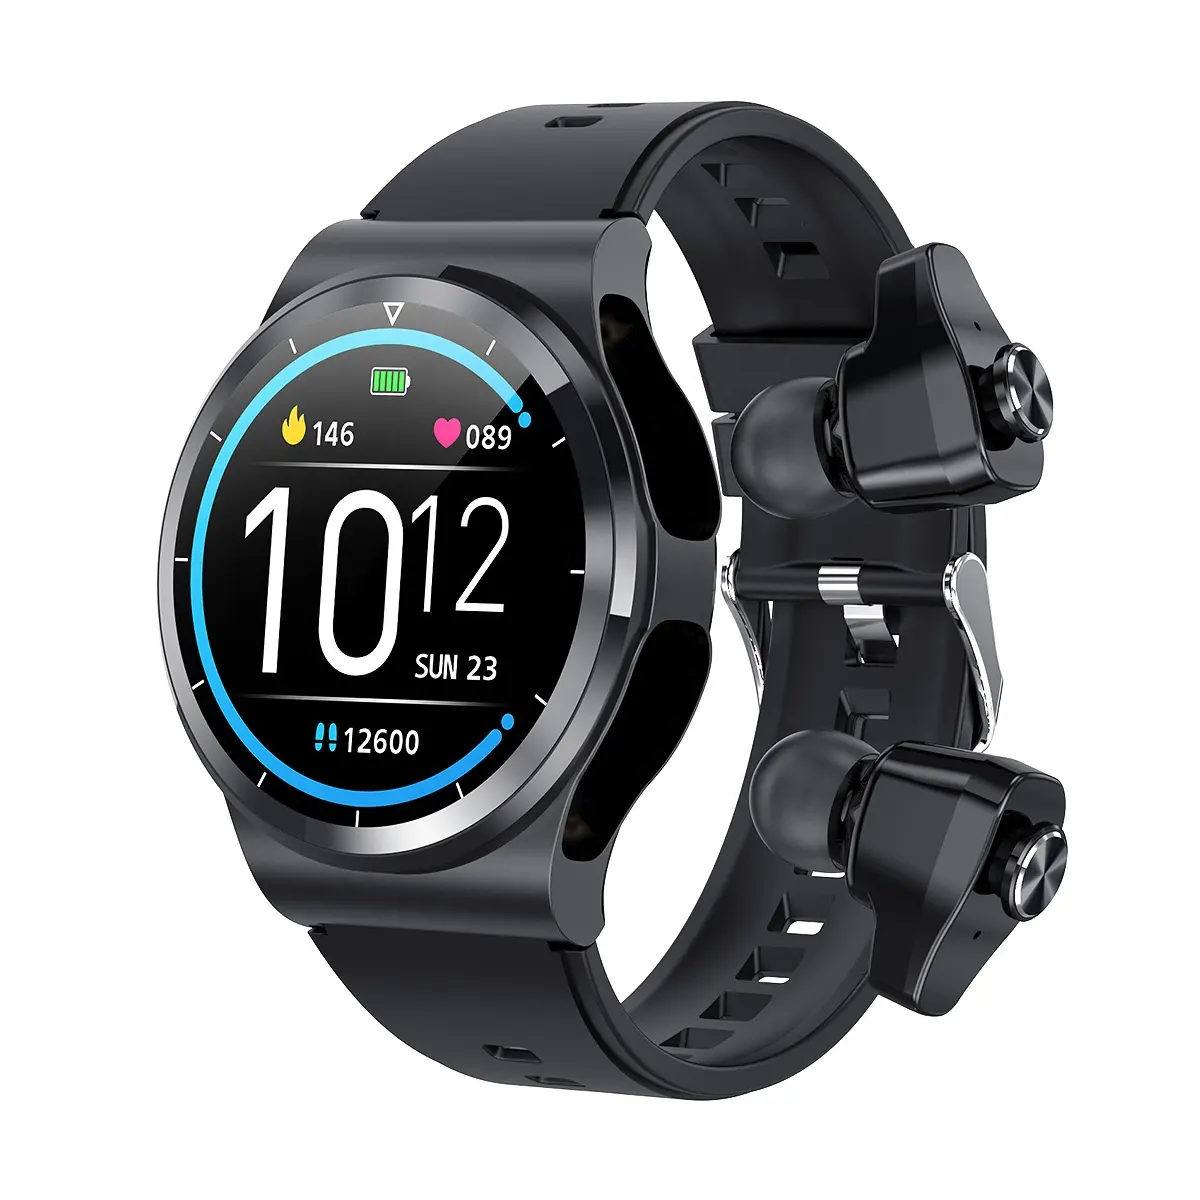 2022 new product BT earphone smart watch